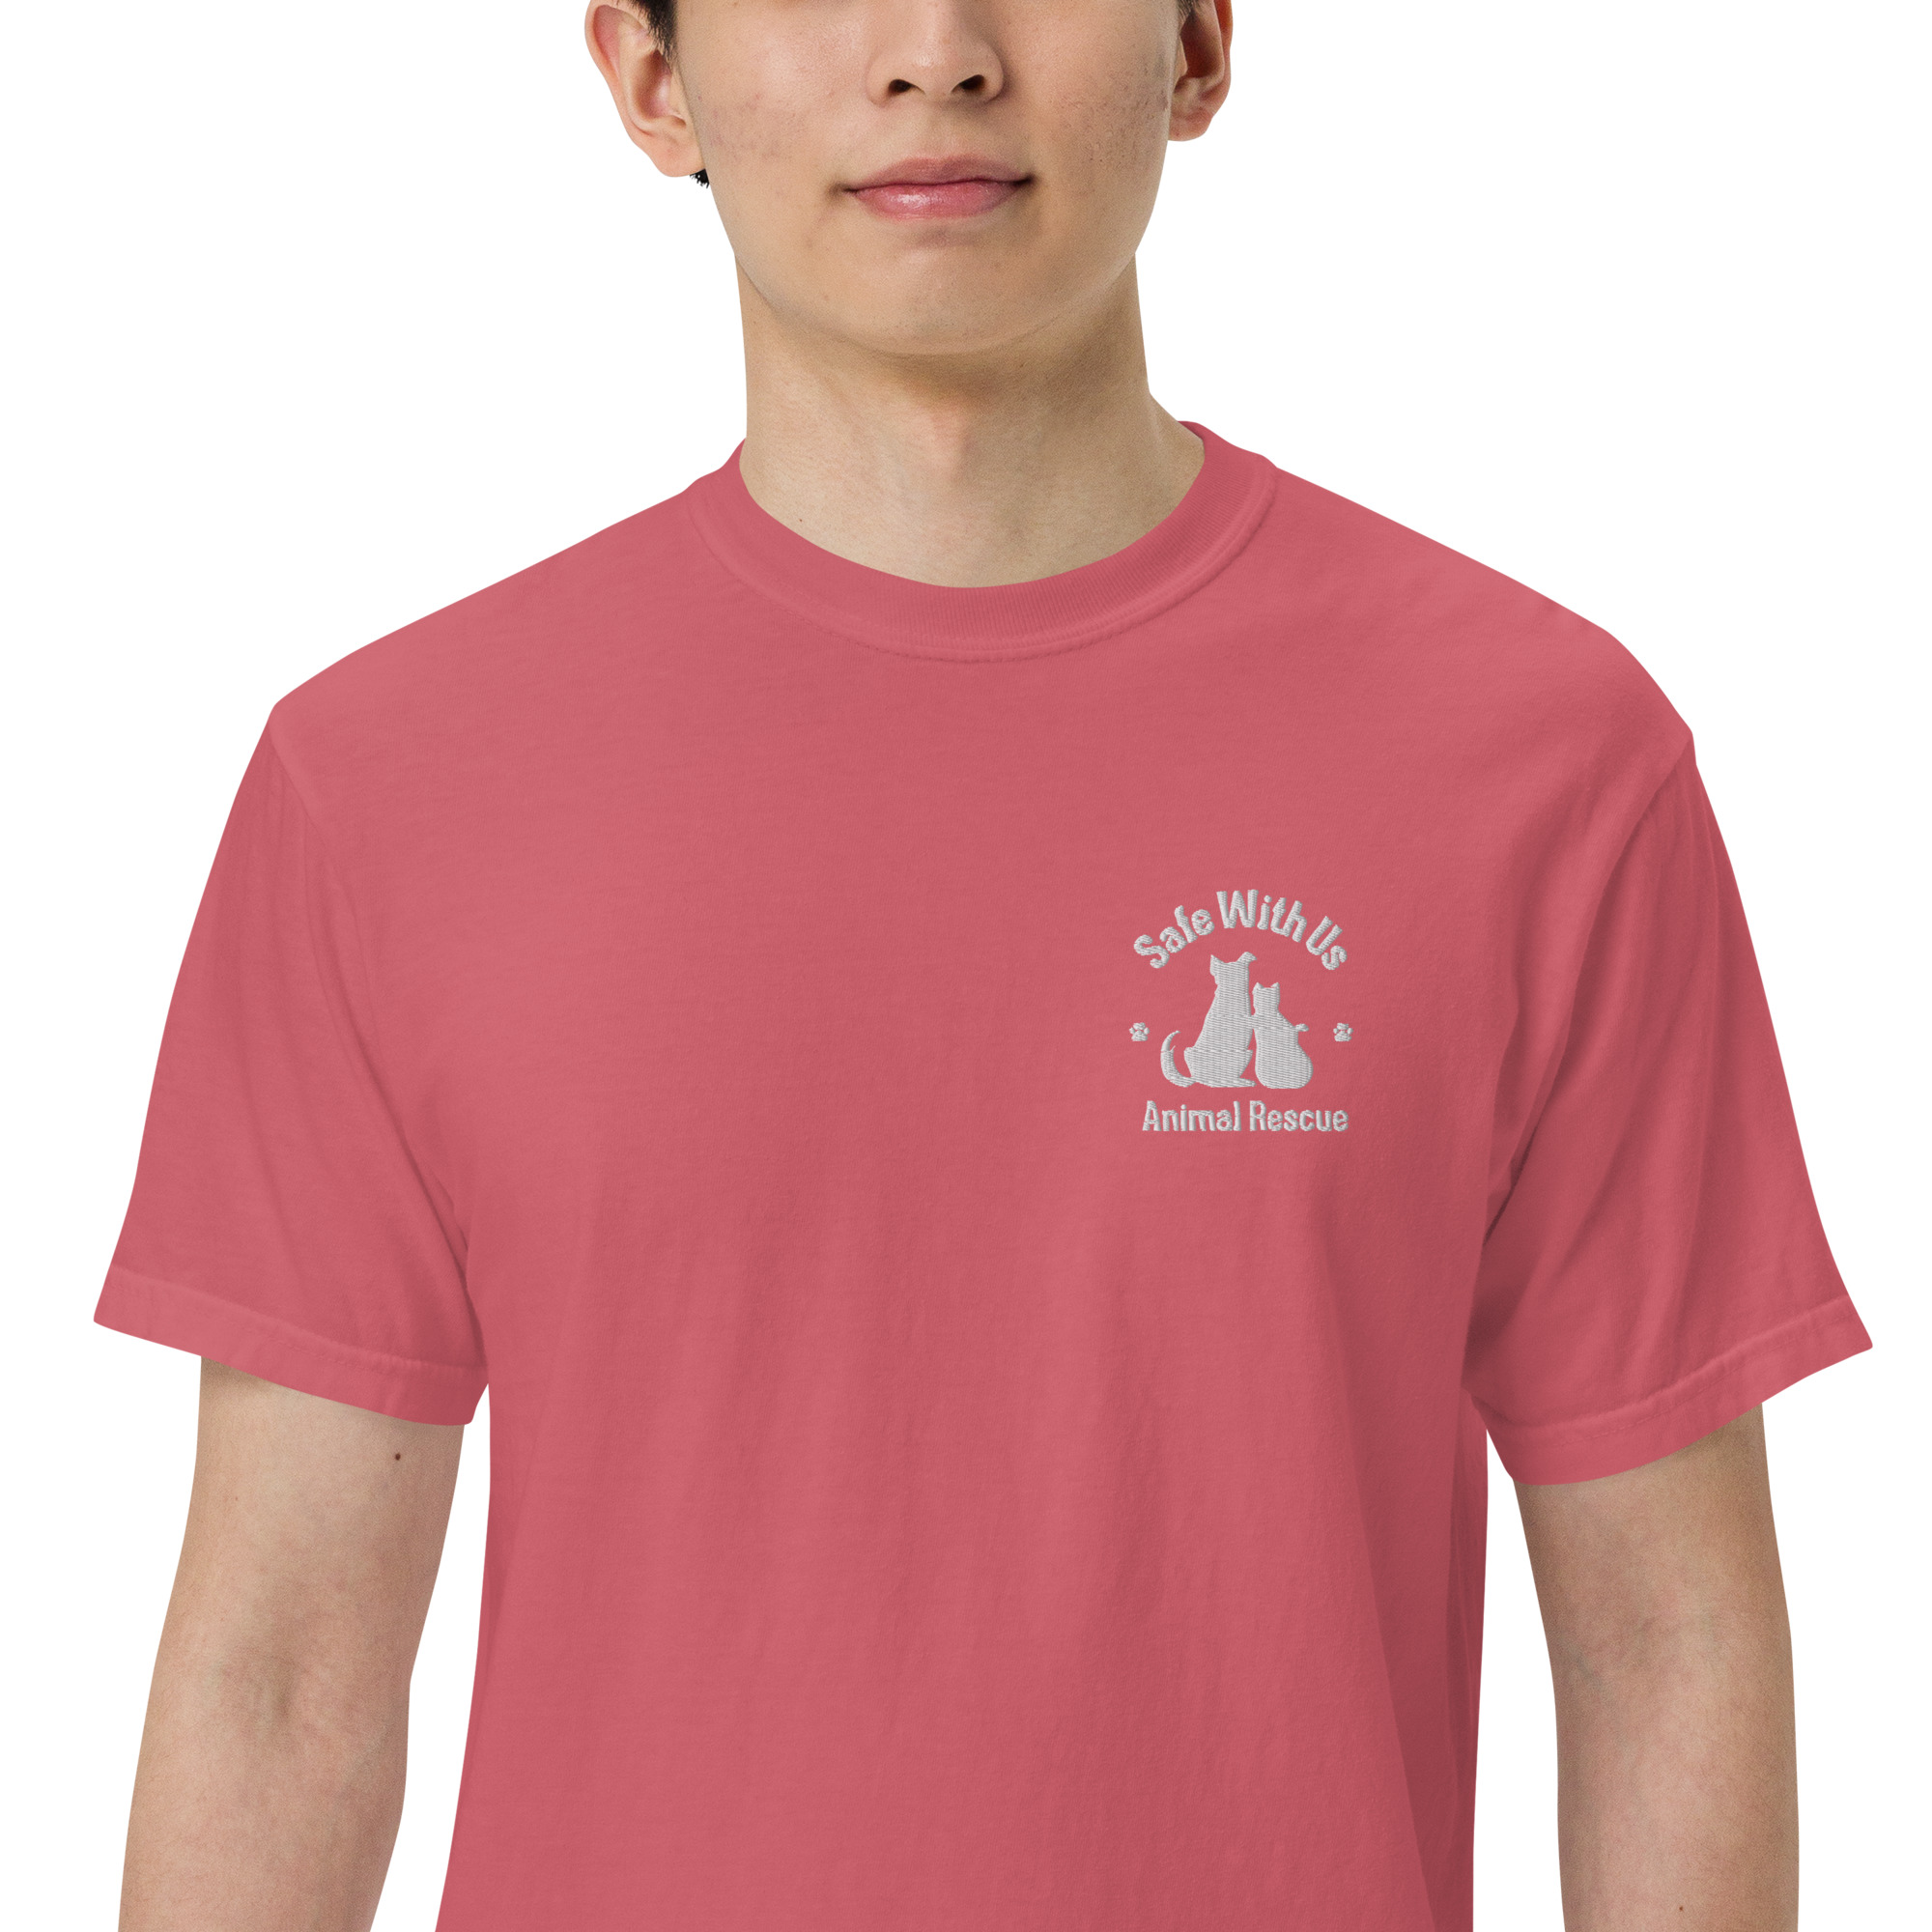 mens-garment-dyed-heavyweight-t-shirt-watermelon-zoomed-in-6415fedc29646.jpg